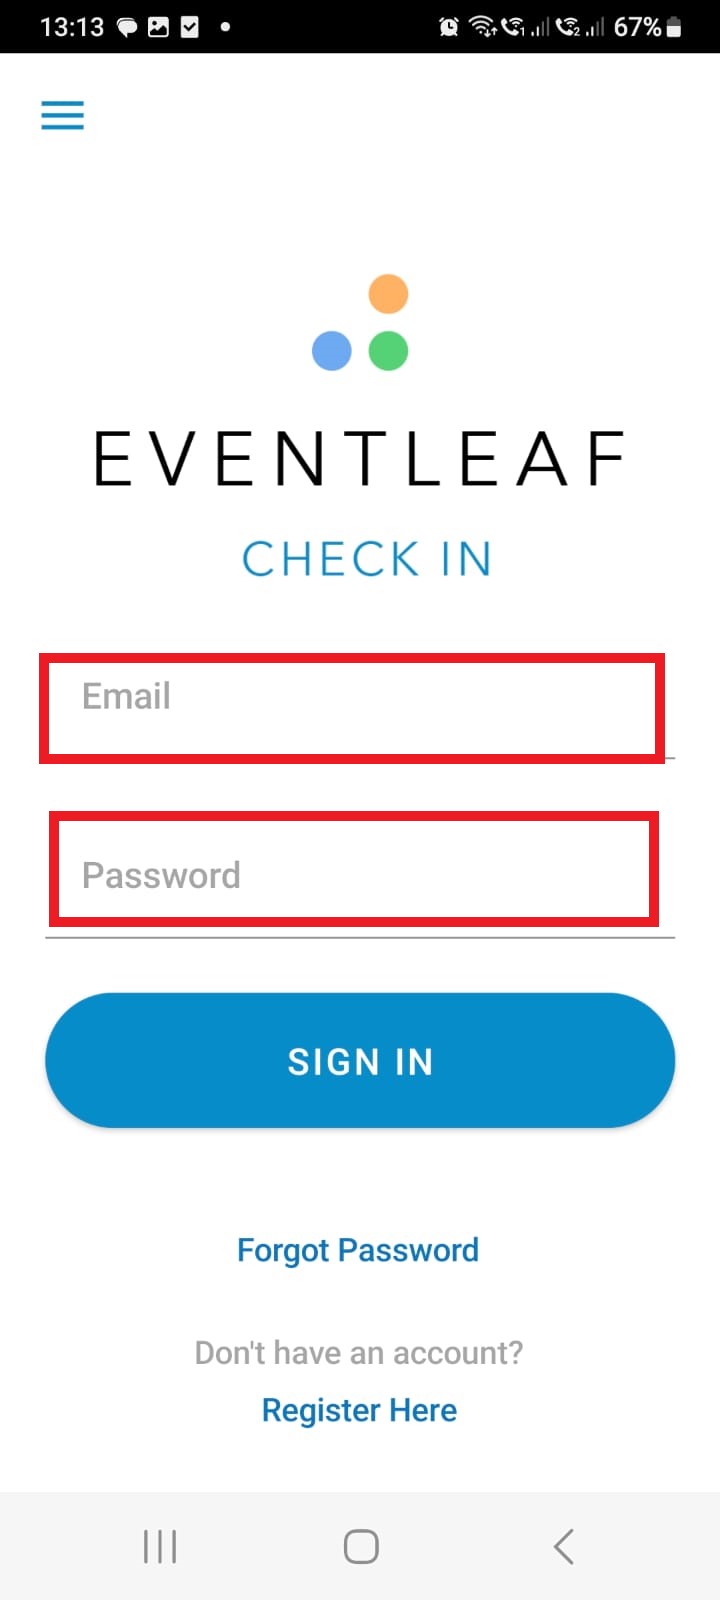 Login using your Eventleaf credentials